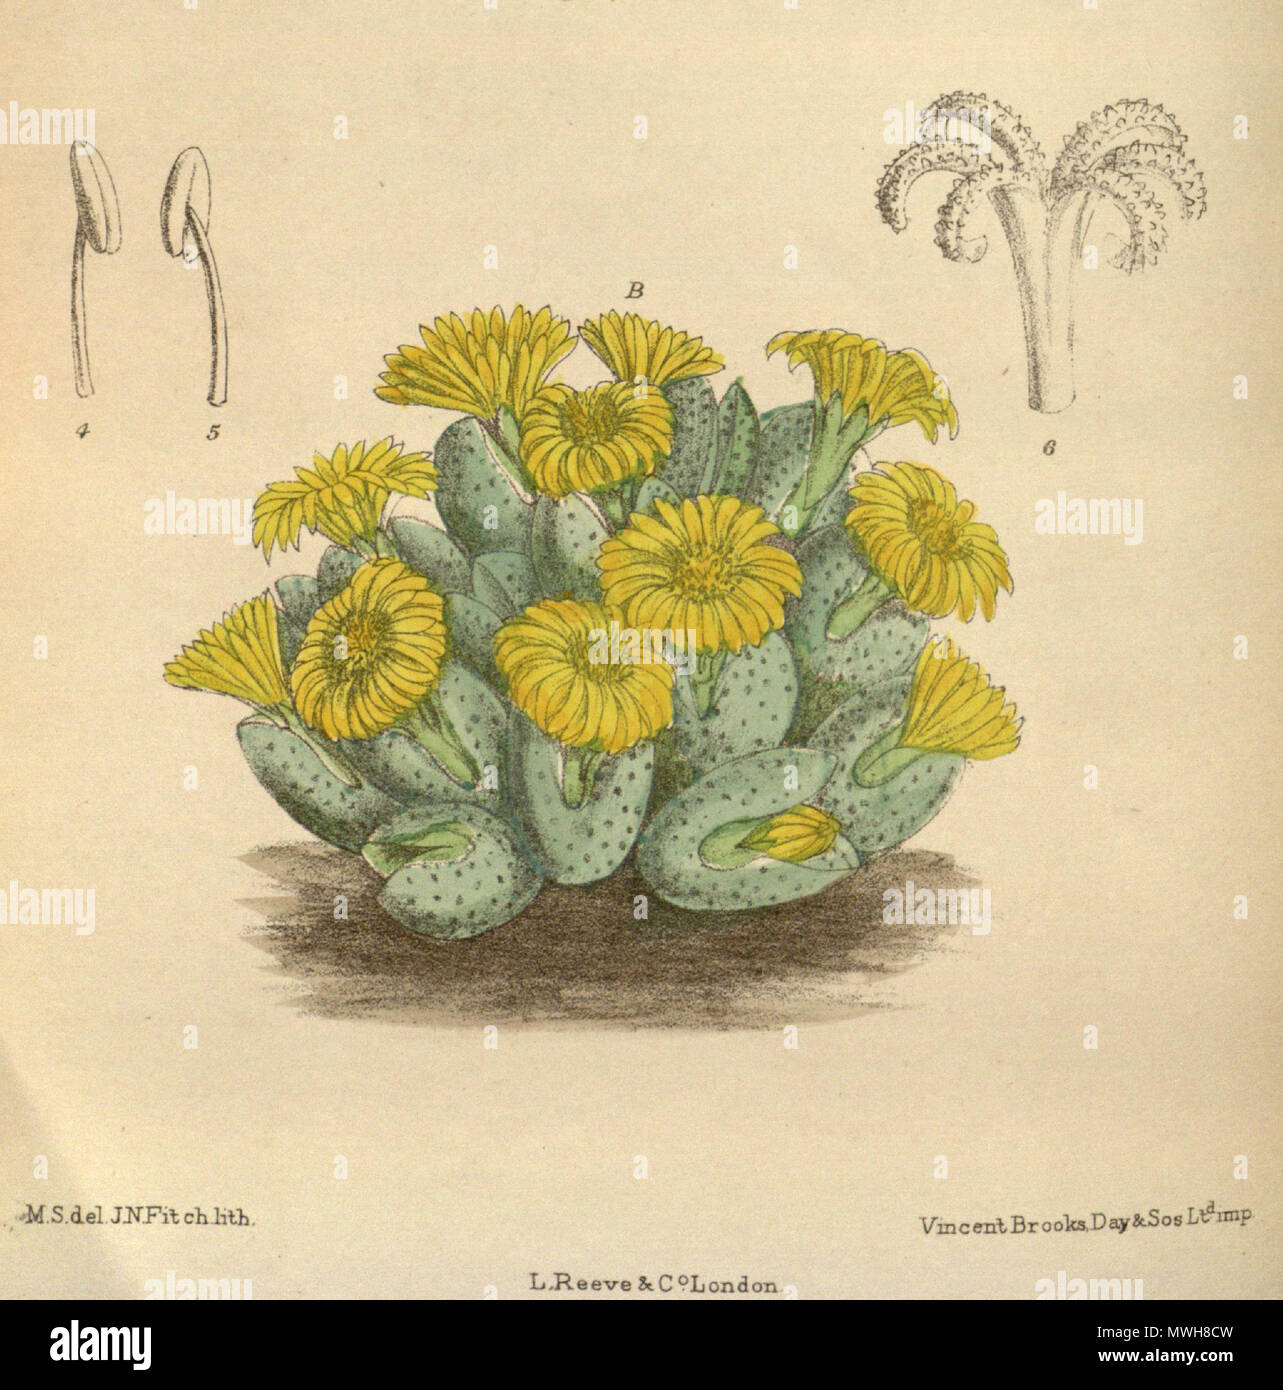 . Mesembryanthemum elishae (= Conophytum bilobum var. elishae), Aizoaceae . 1918. M.S. del., J.N.Fitch lith. 413 Mesembryanthemum elishae 144-8776B Stock Photo